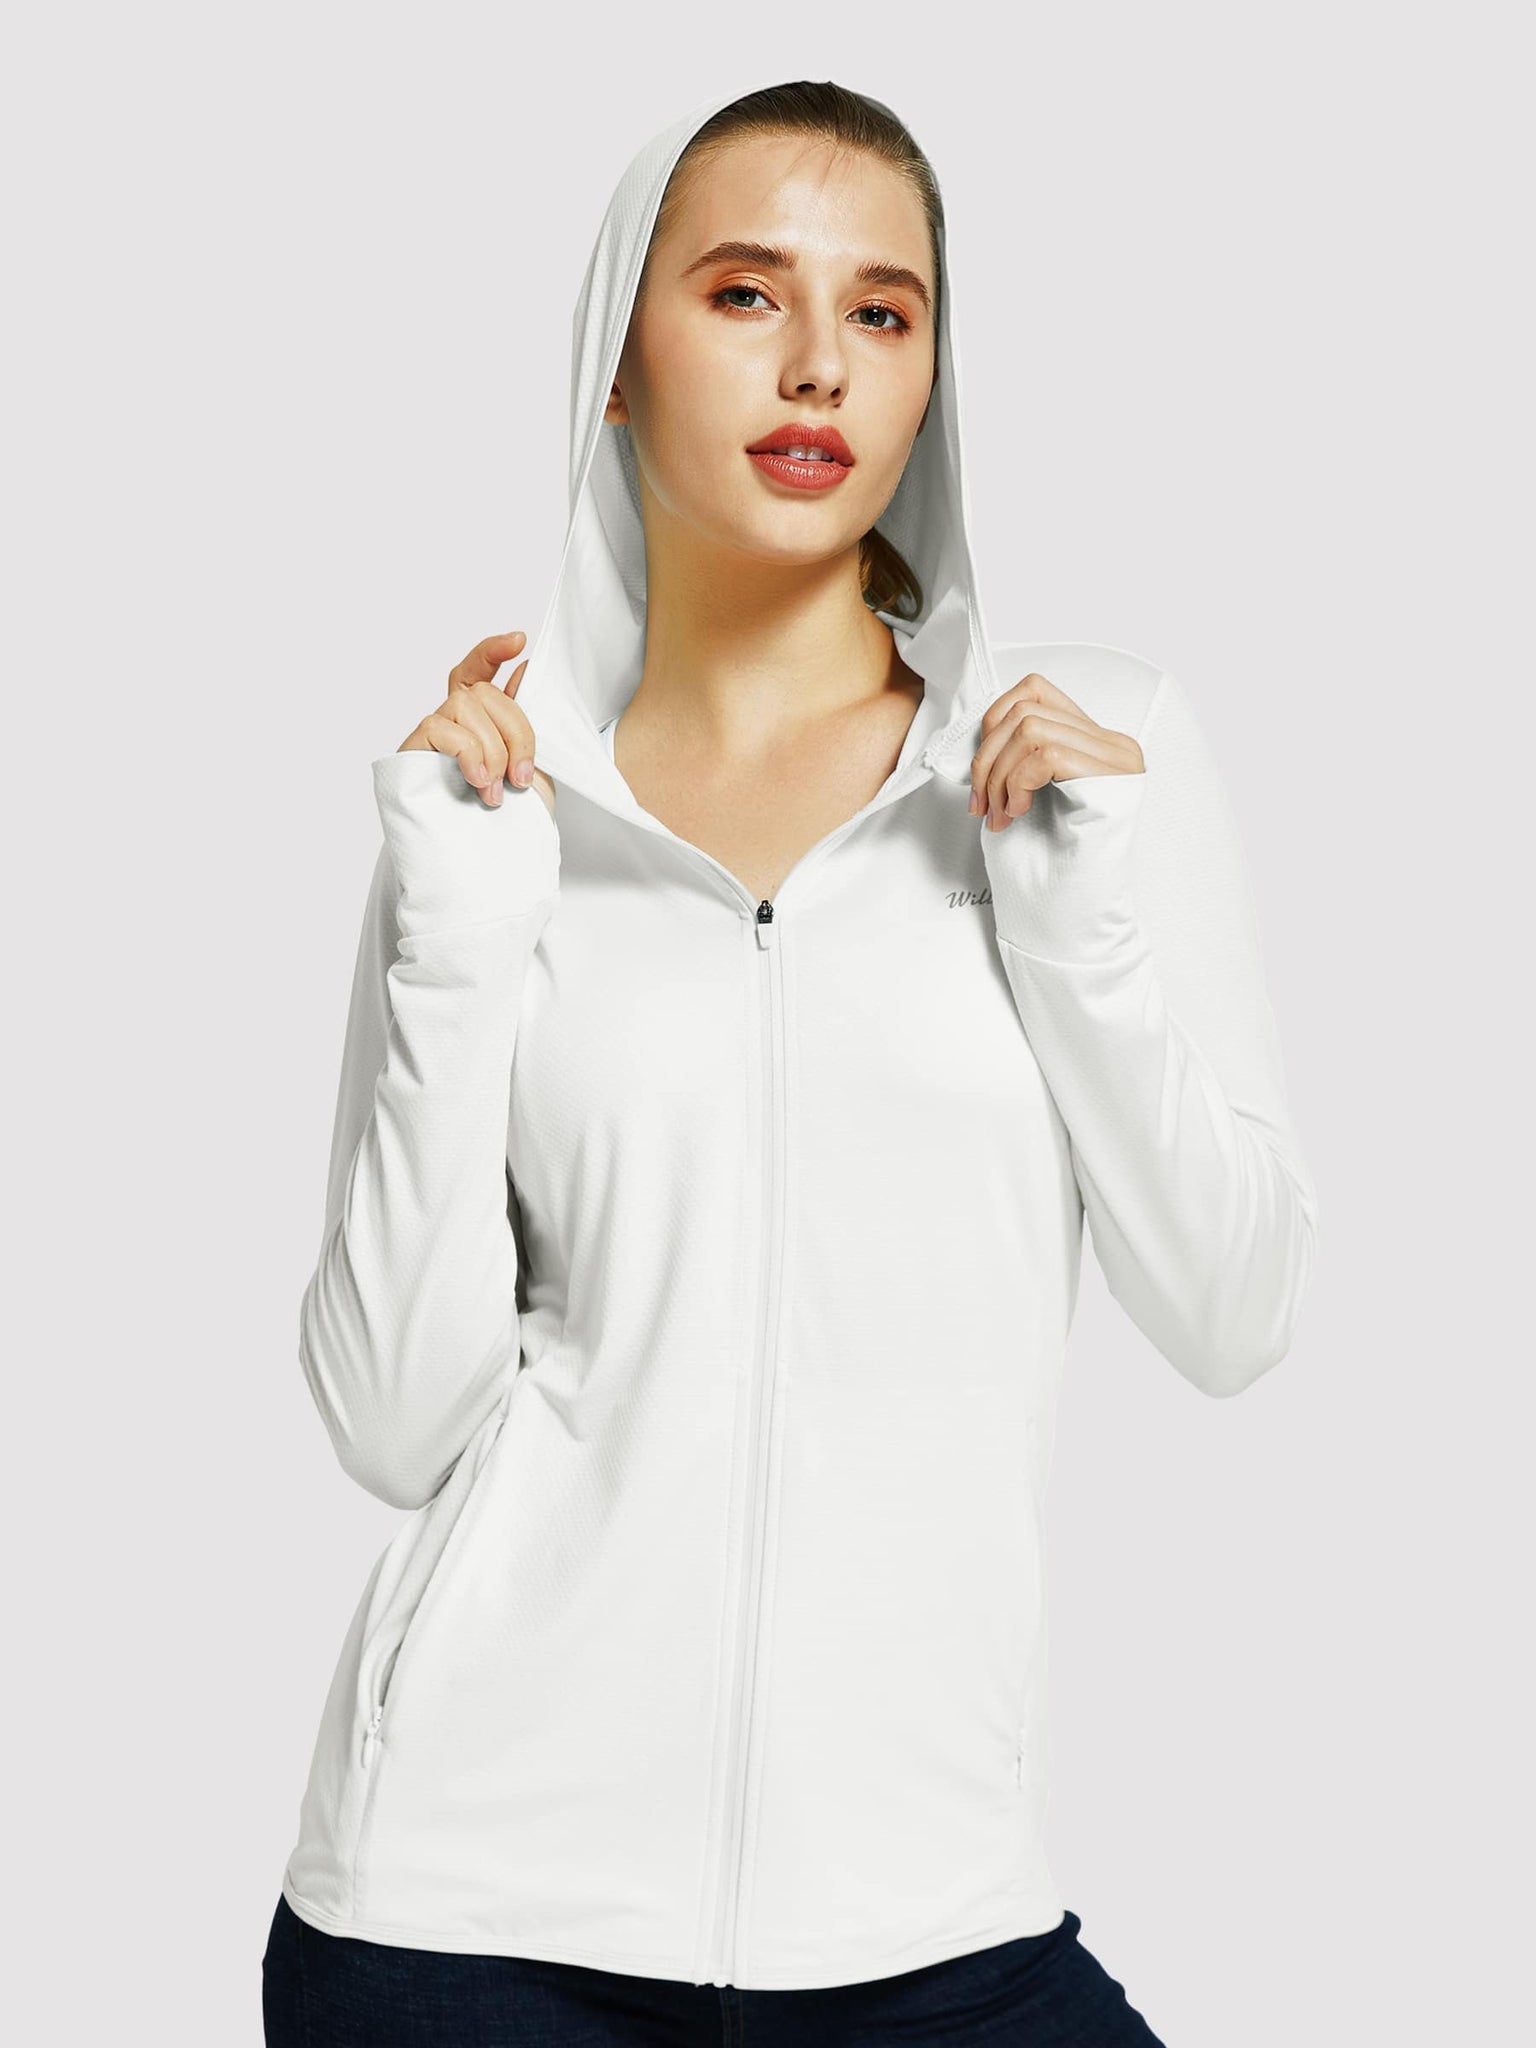 Willit Women's Outdoor Sun Protection Jacket Full Zip_White_model3